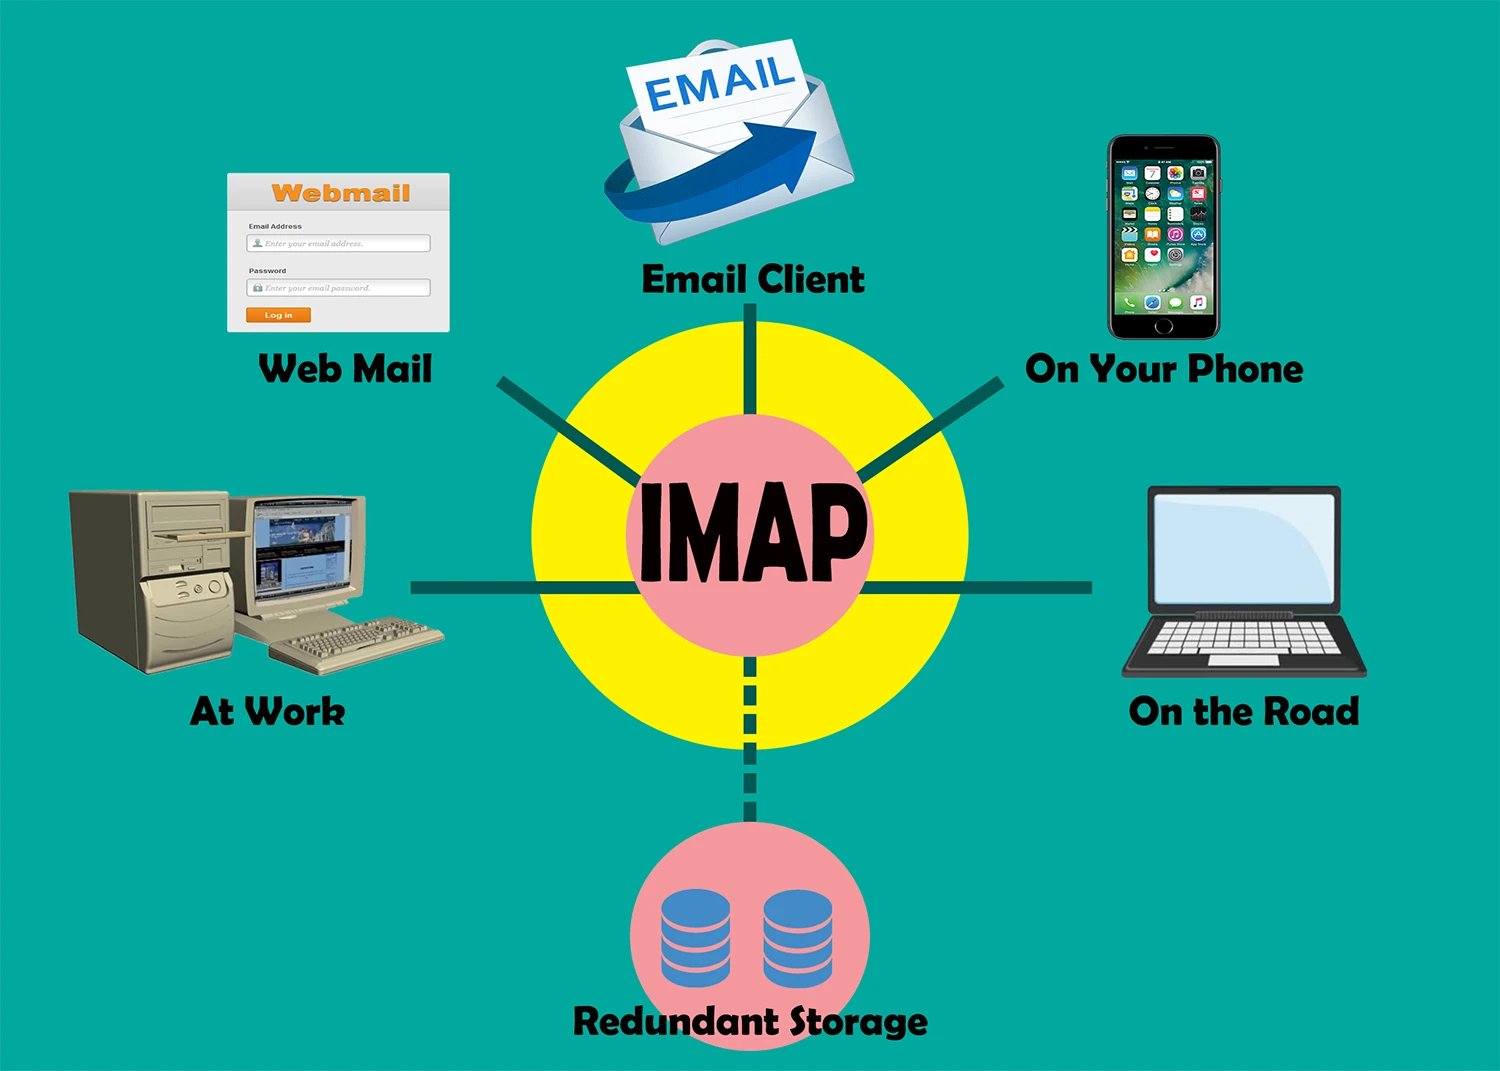 IMAP - Internet Message Access Protocol